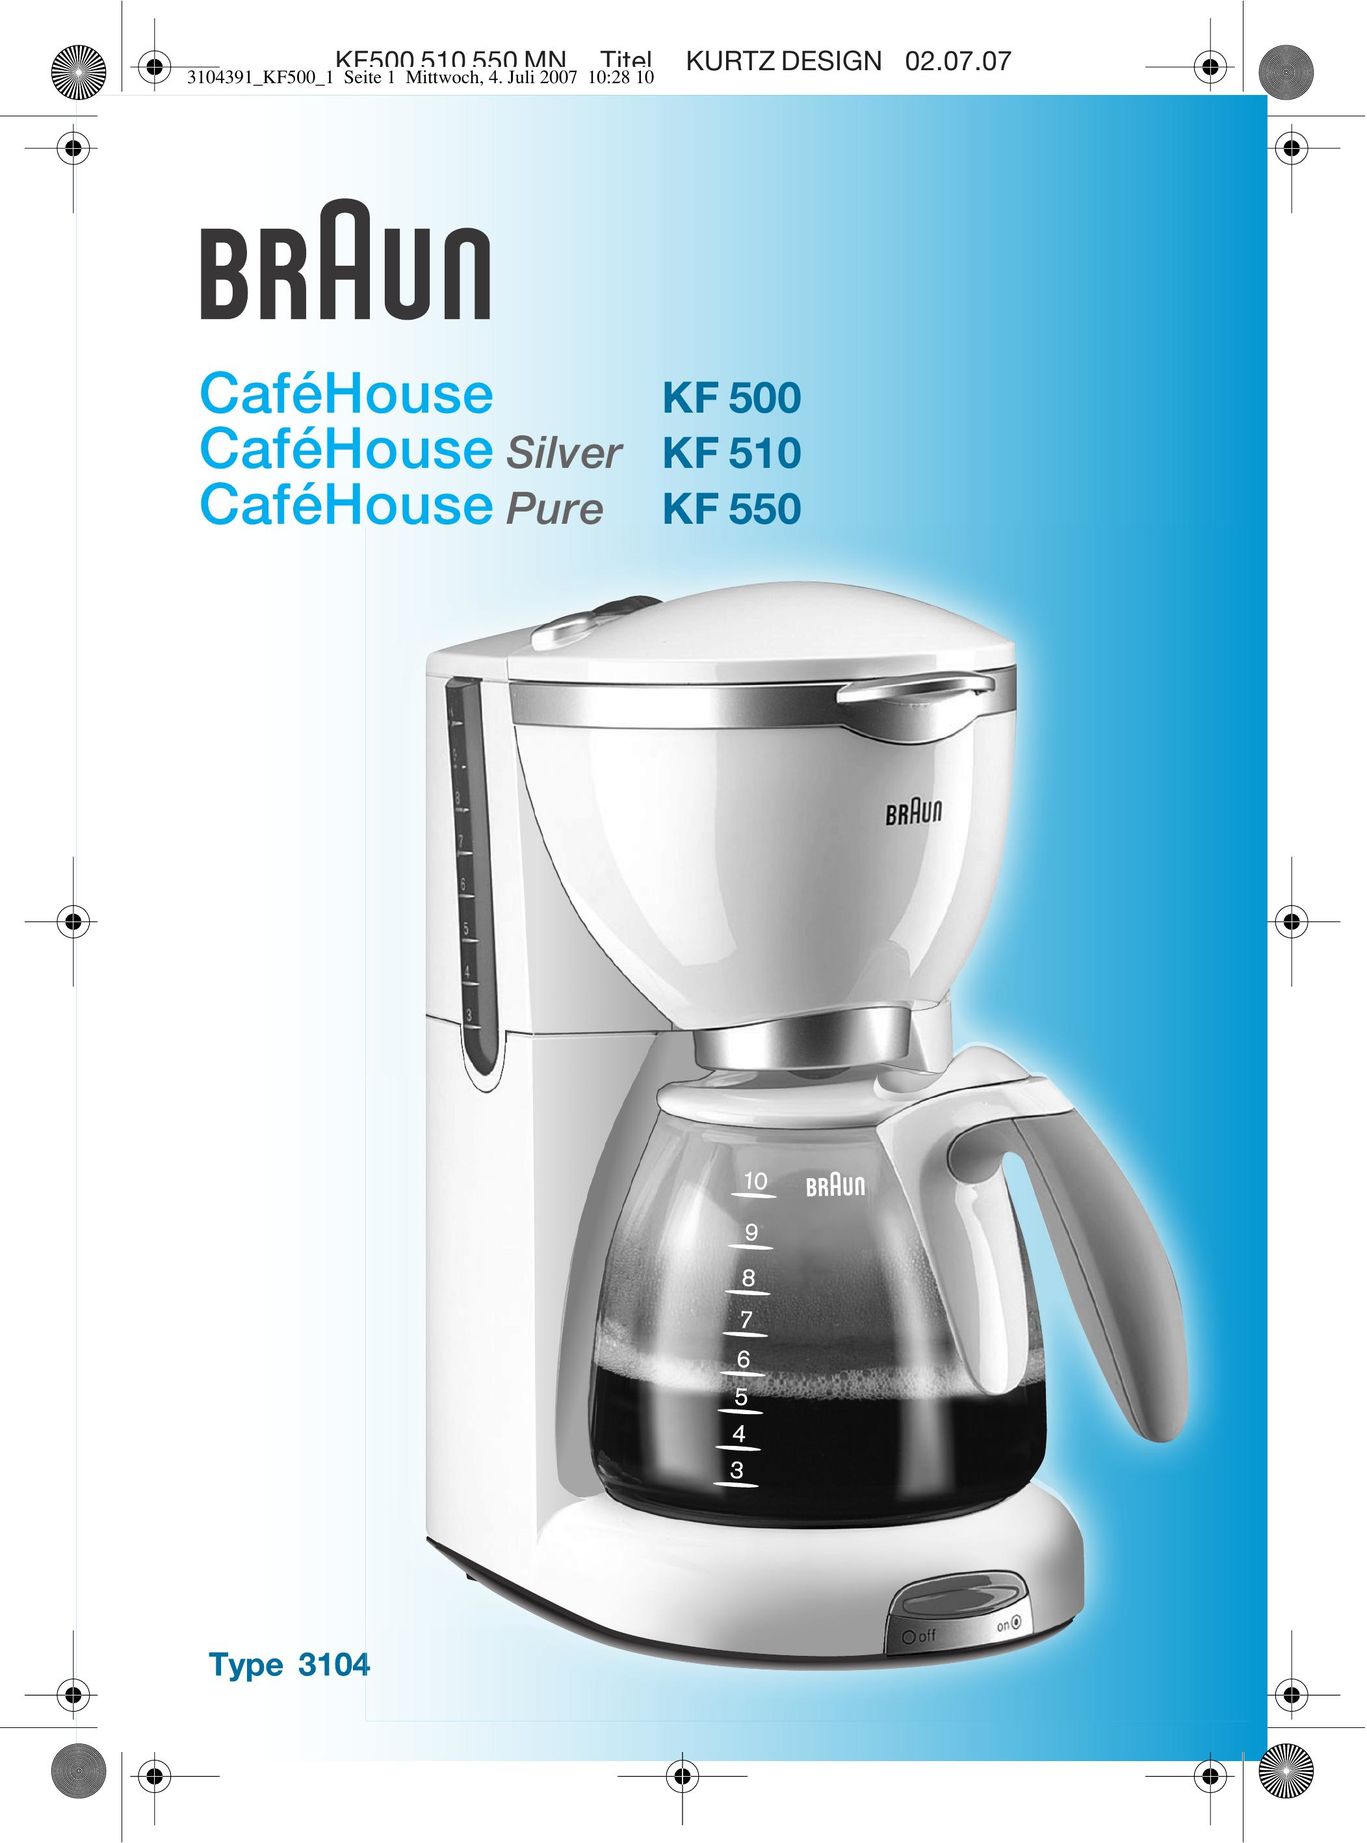 Braun CafHouse Pure KF 550 Coffeemaker User Manual